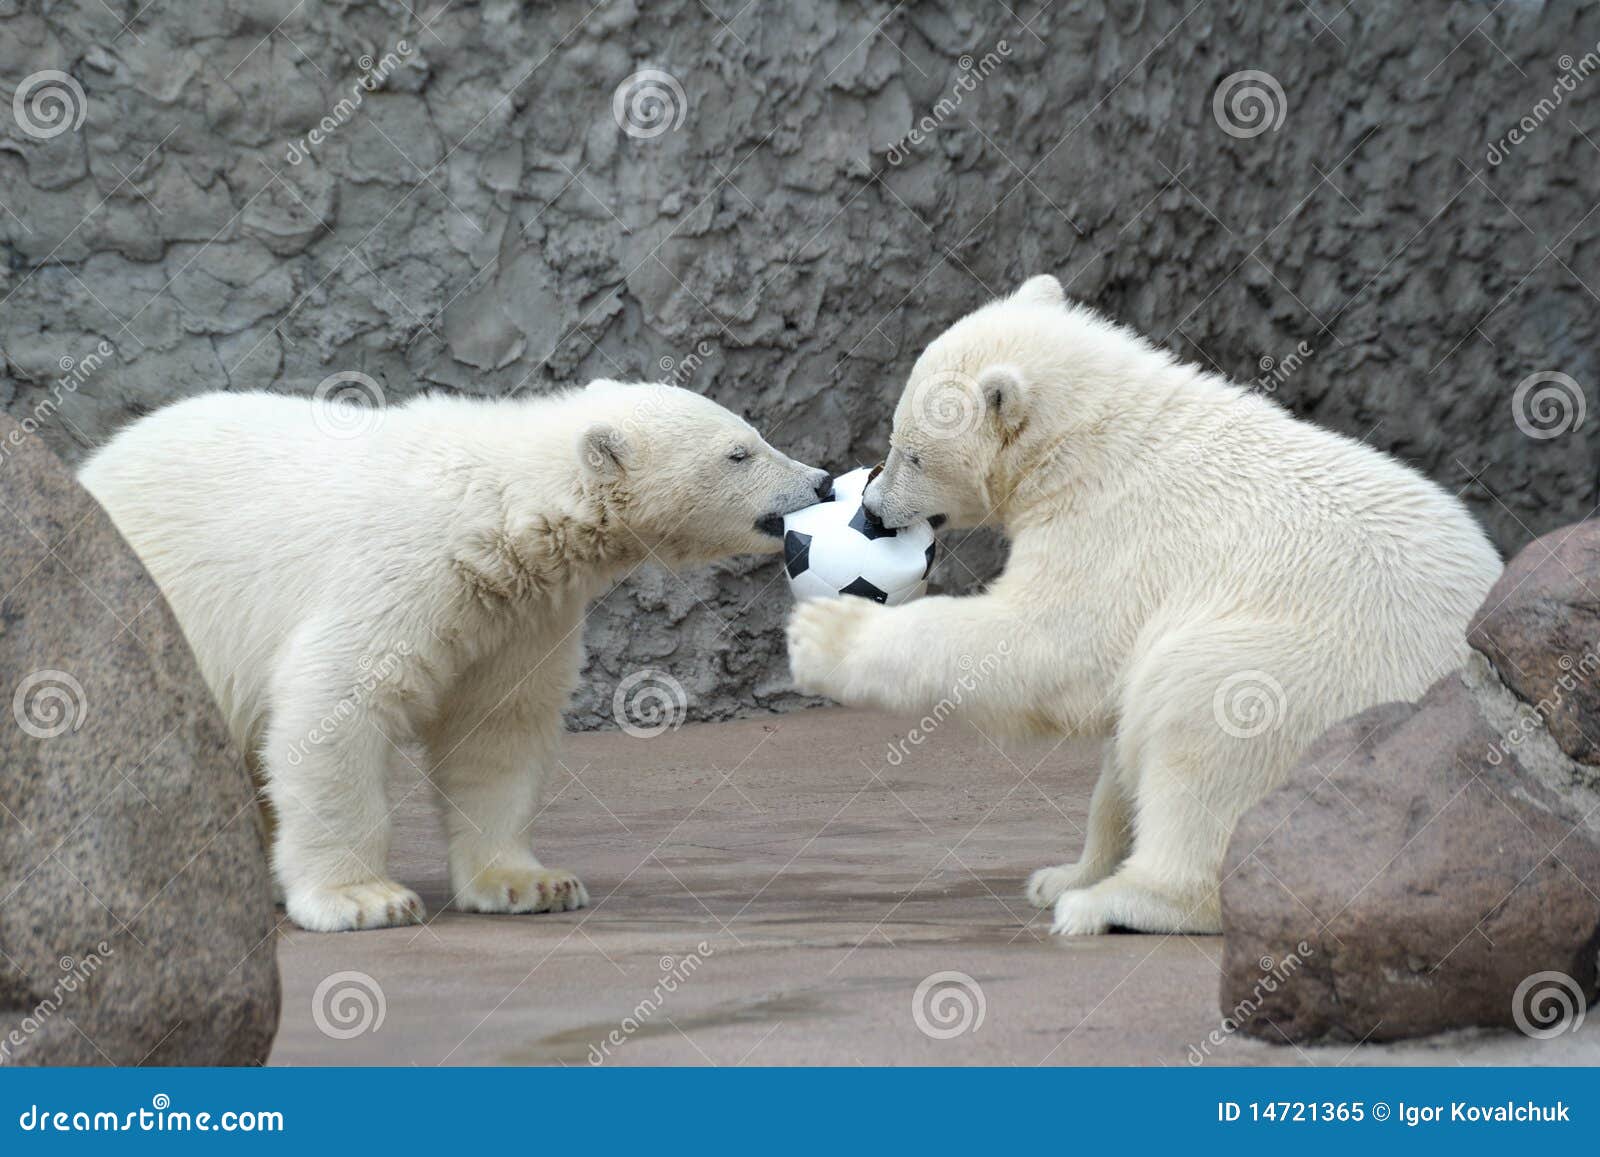 two-little-polar-bears-play-soccer-14721